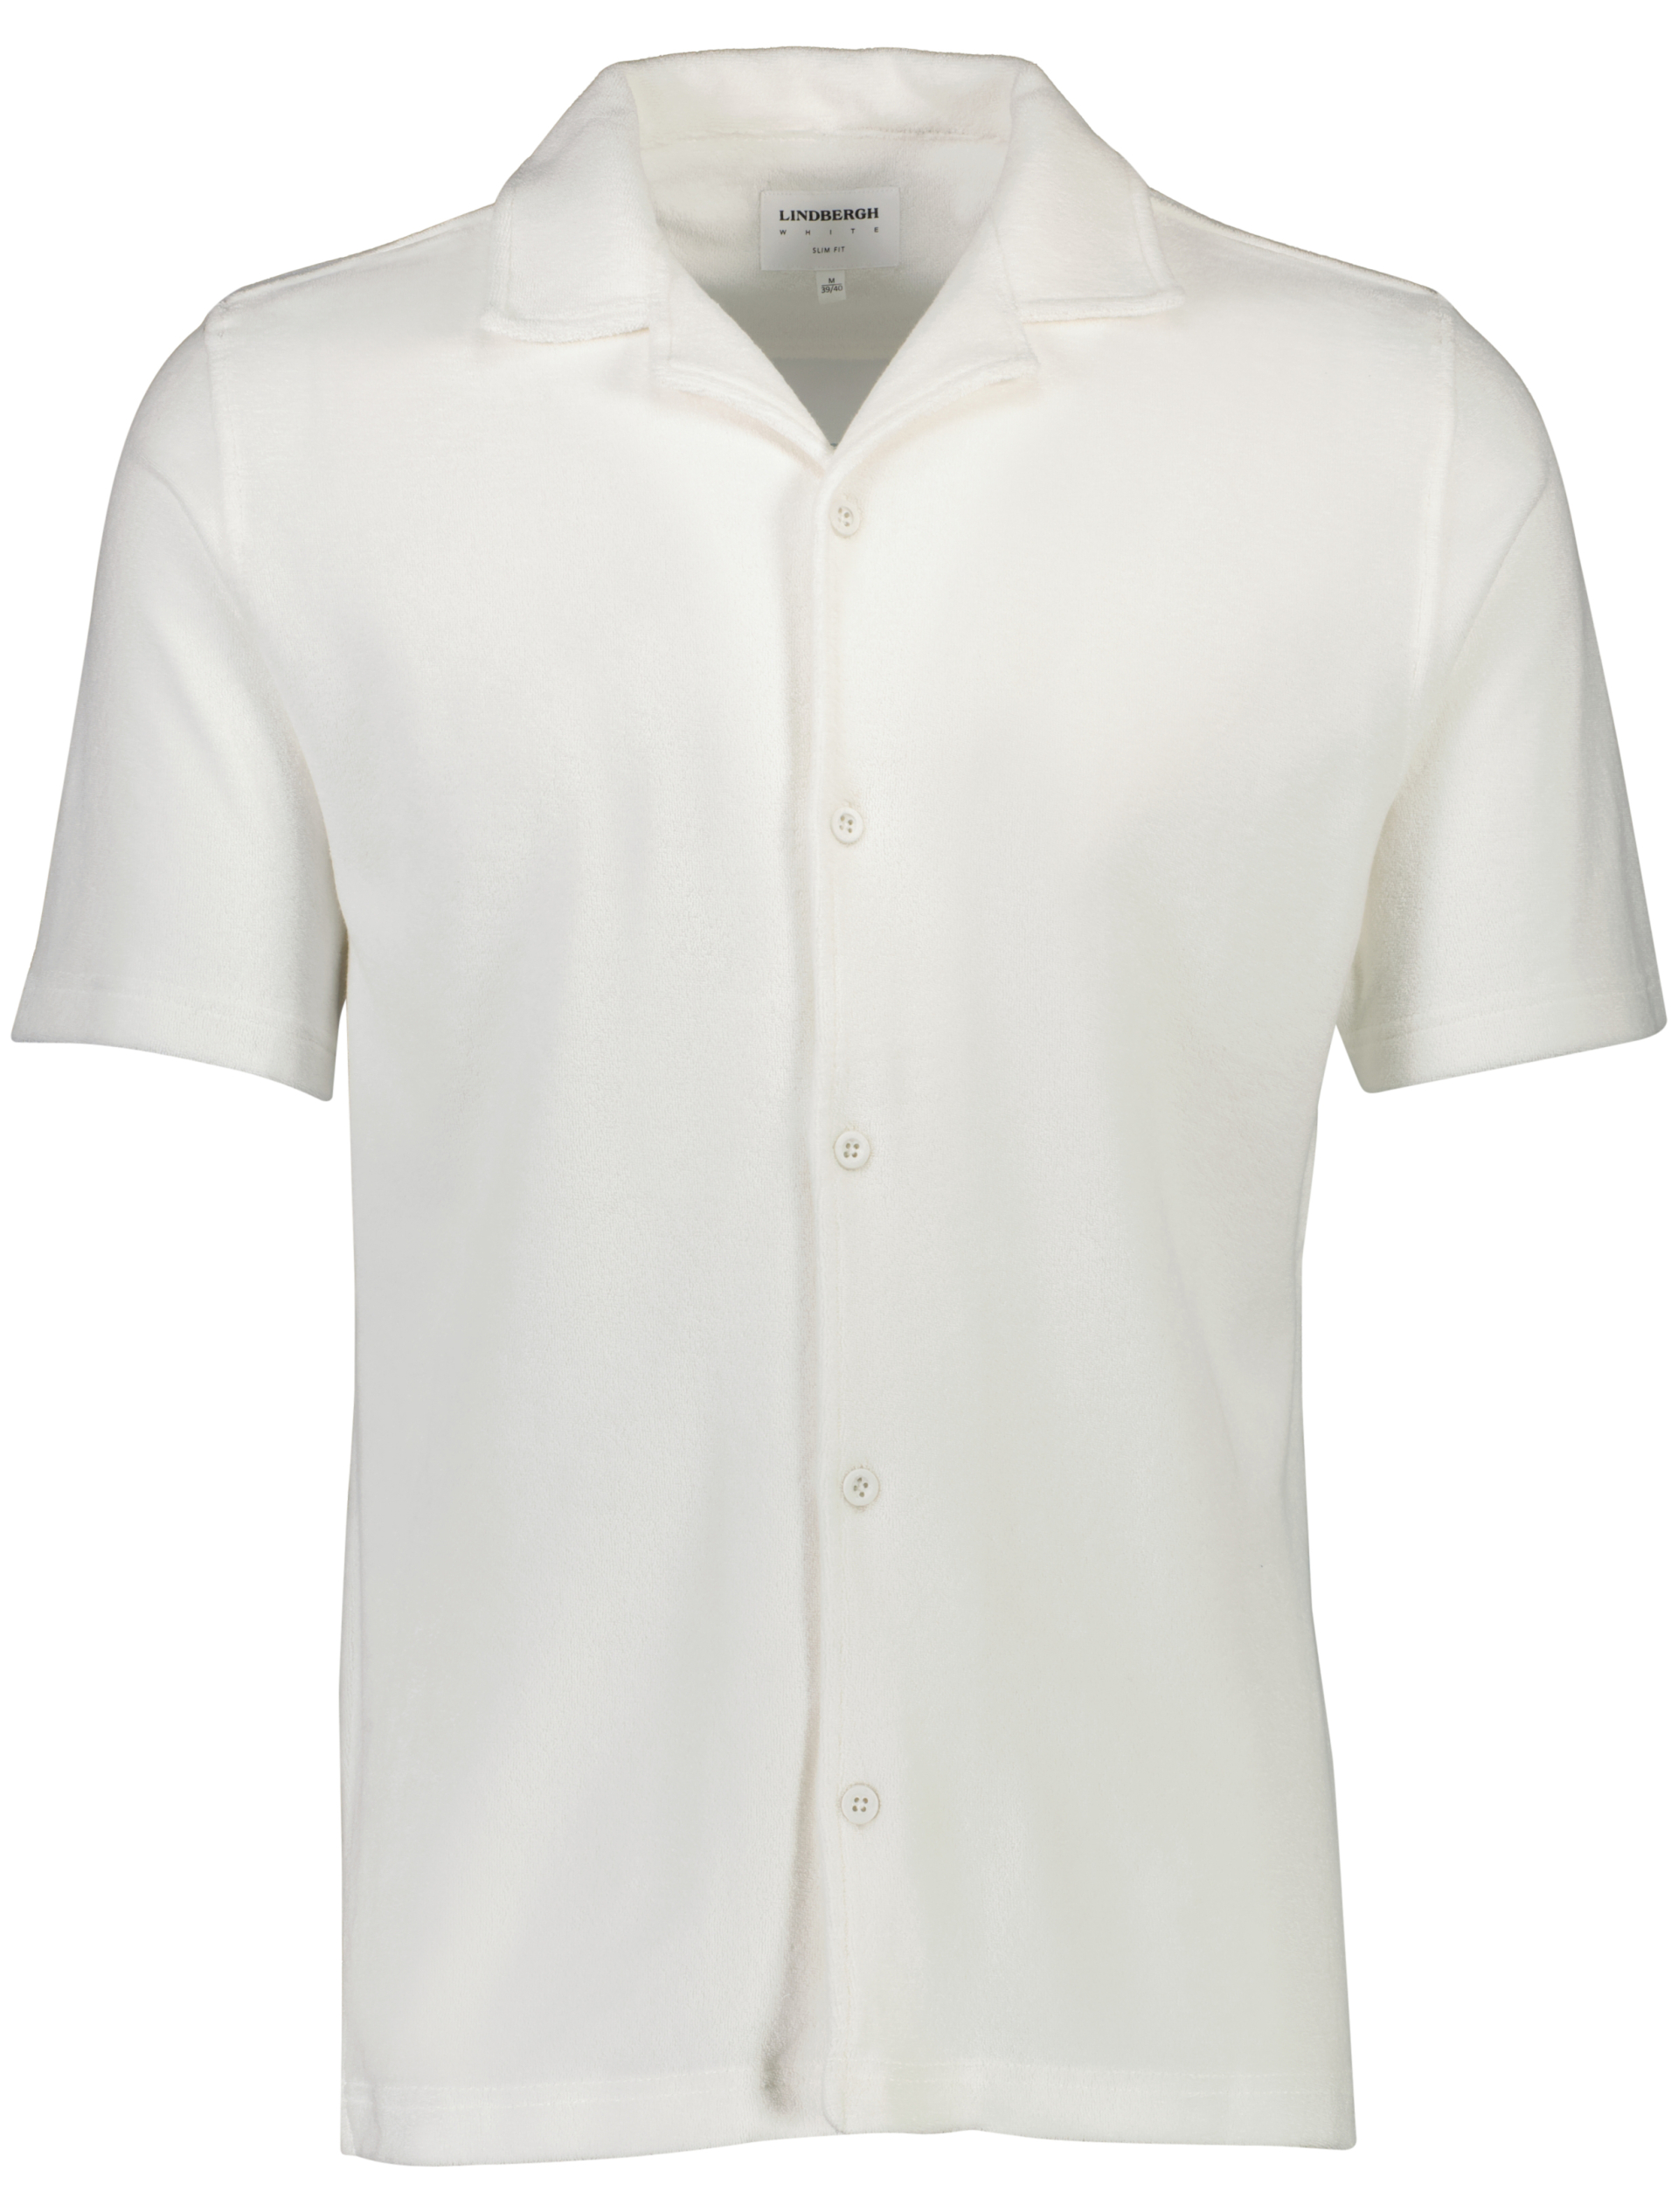 Lindbergh Casual skjorta vit / off white